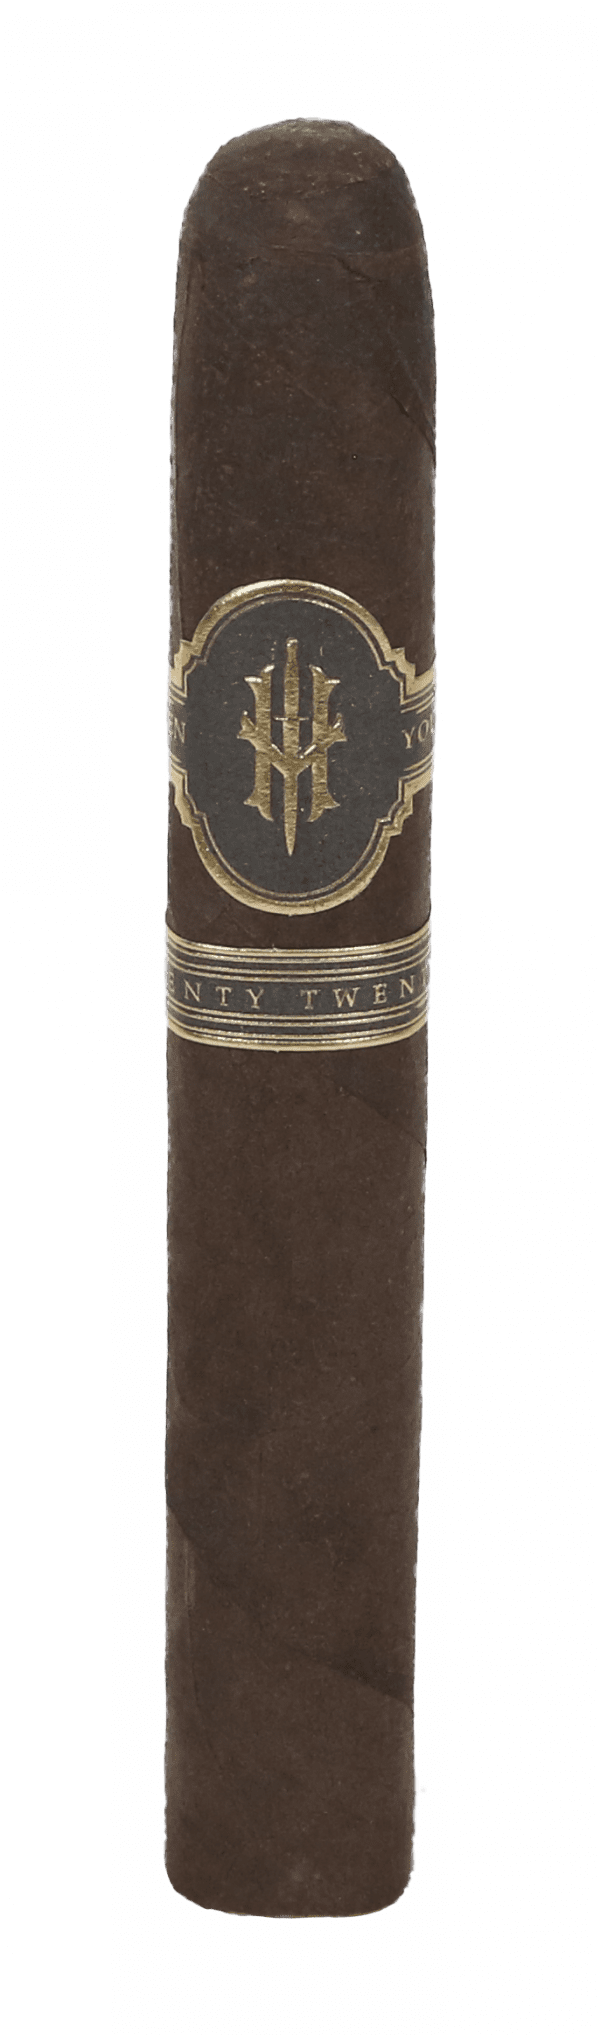 Single Hooten Young Toro cigar